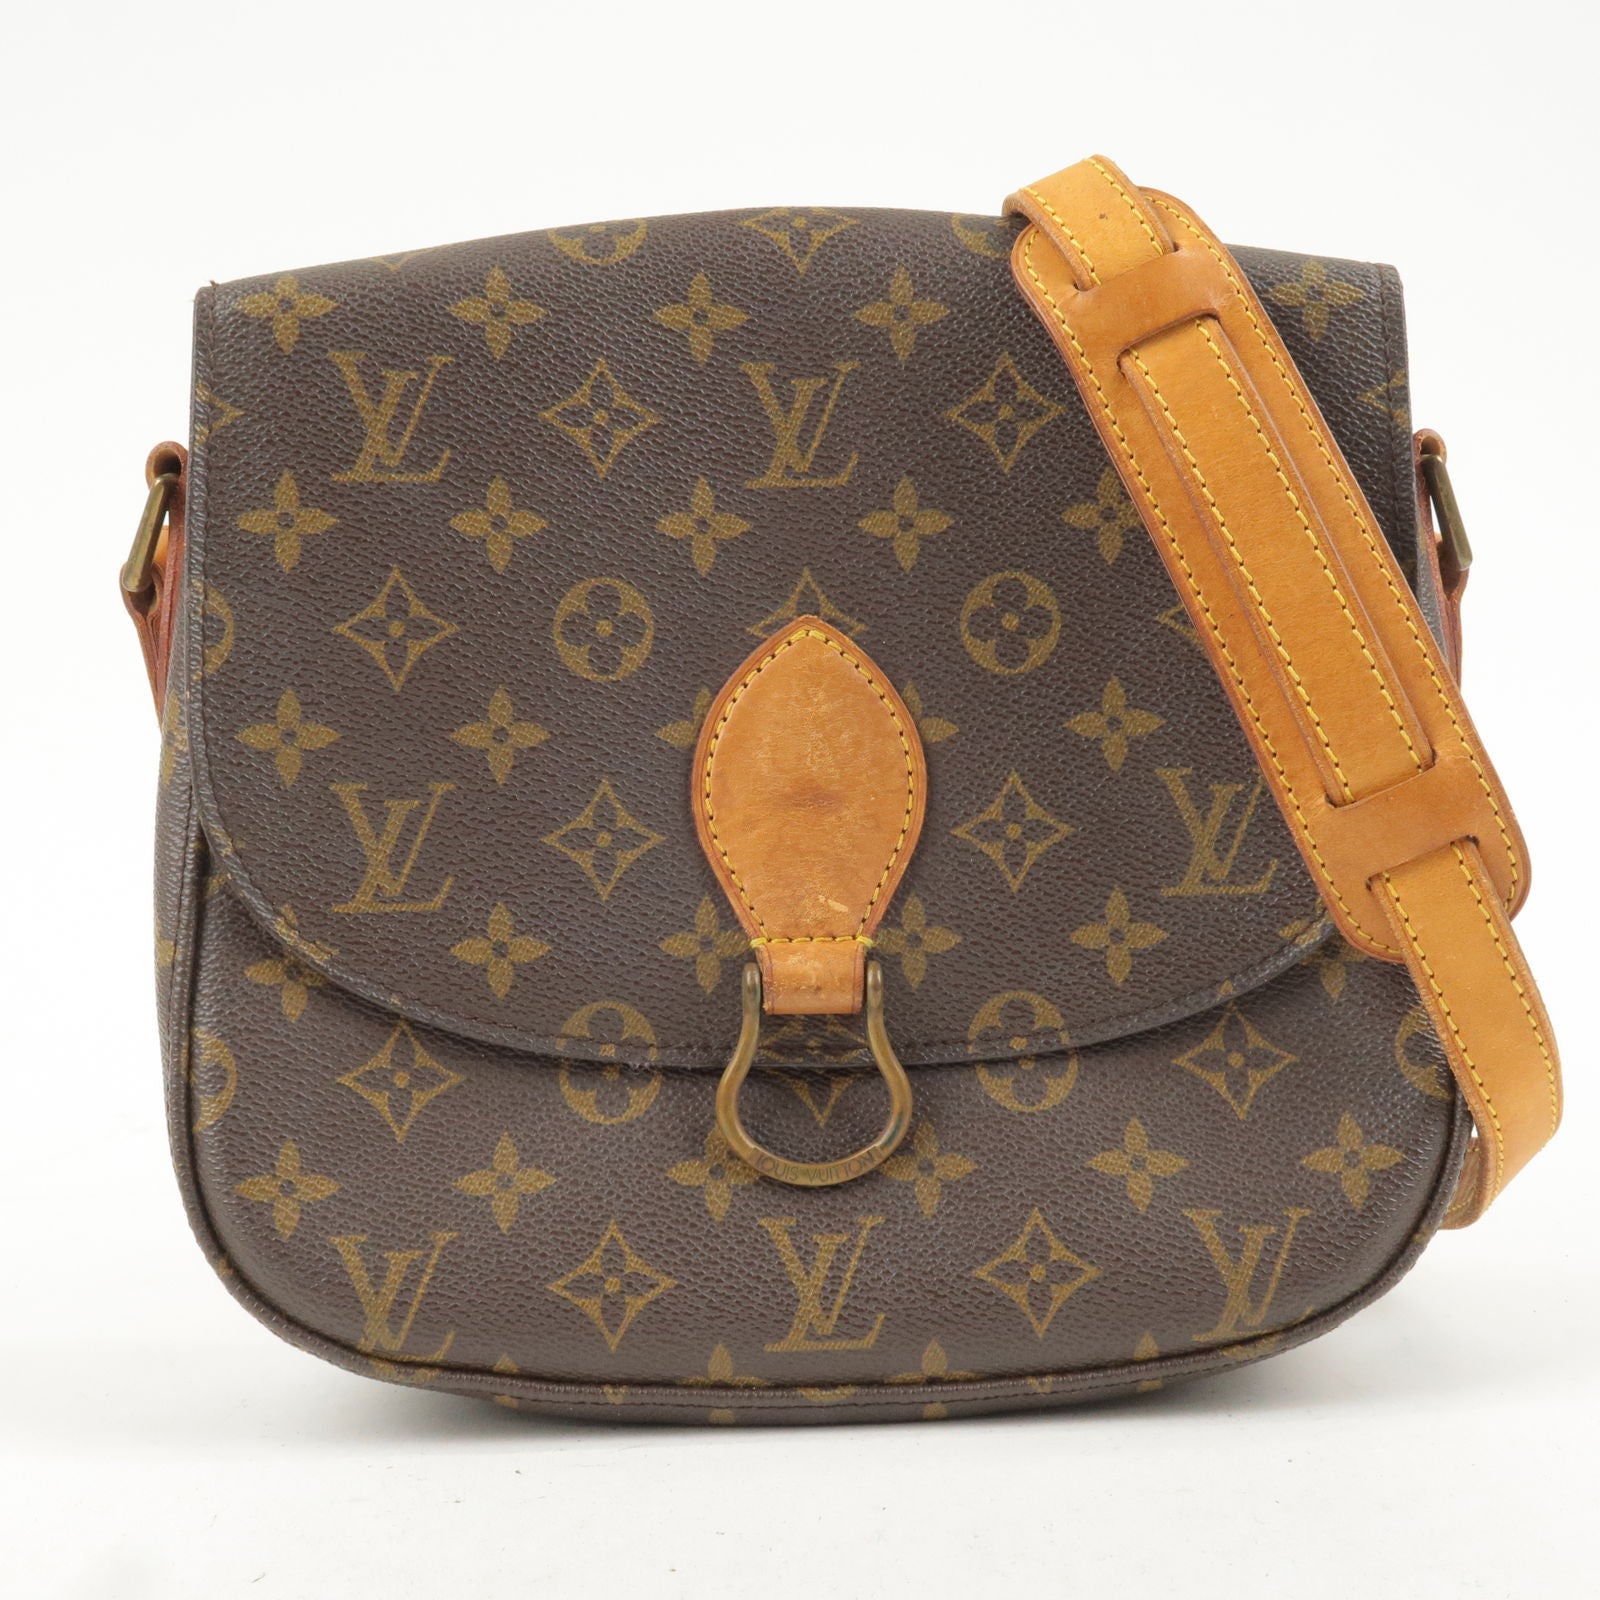 Saint Cloud vintage leather crossbody bag